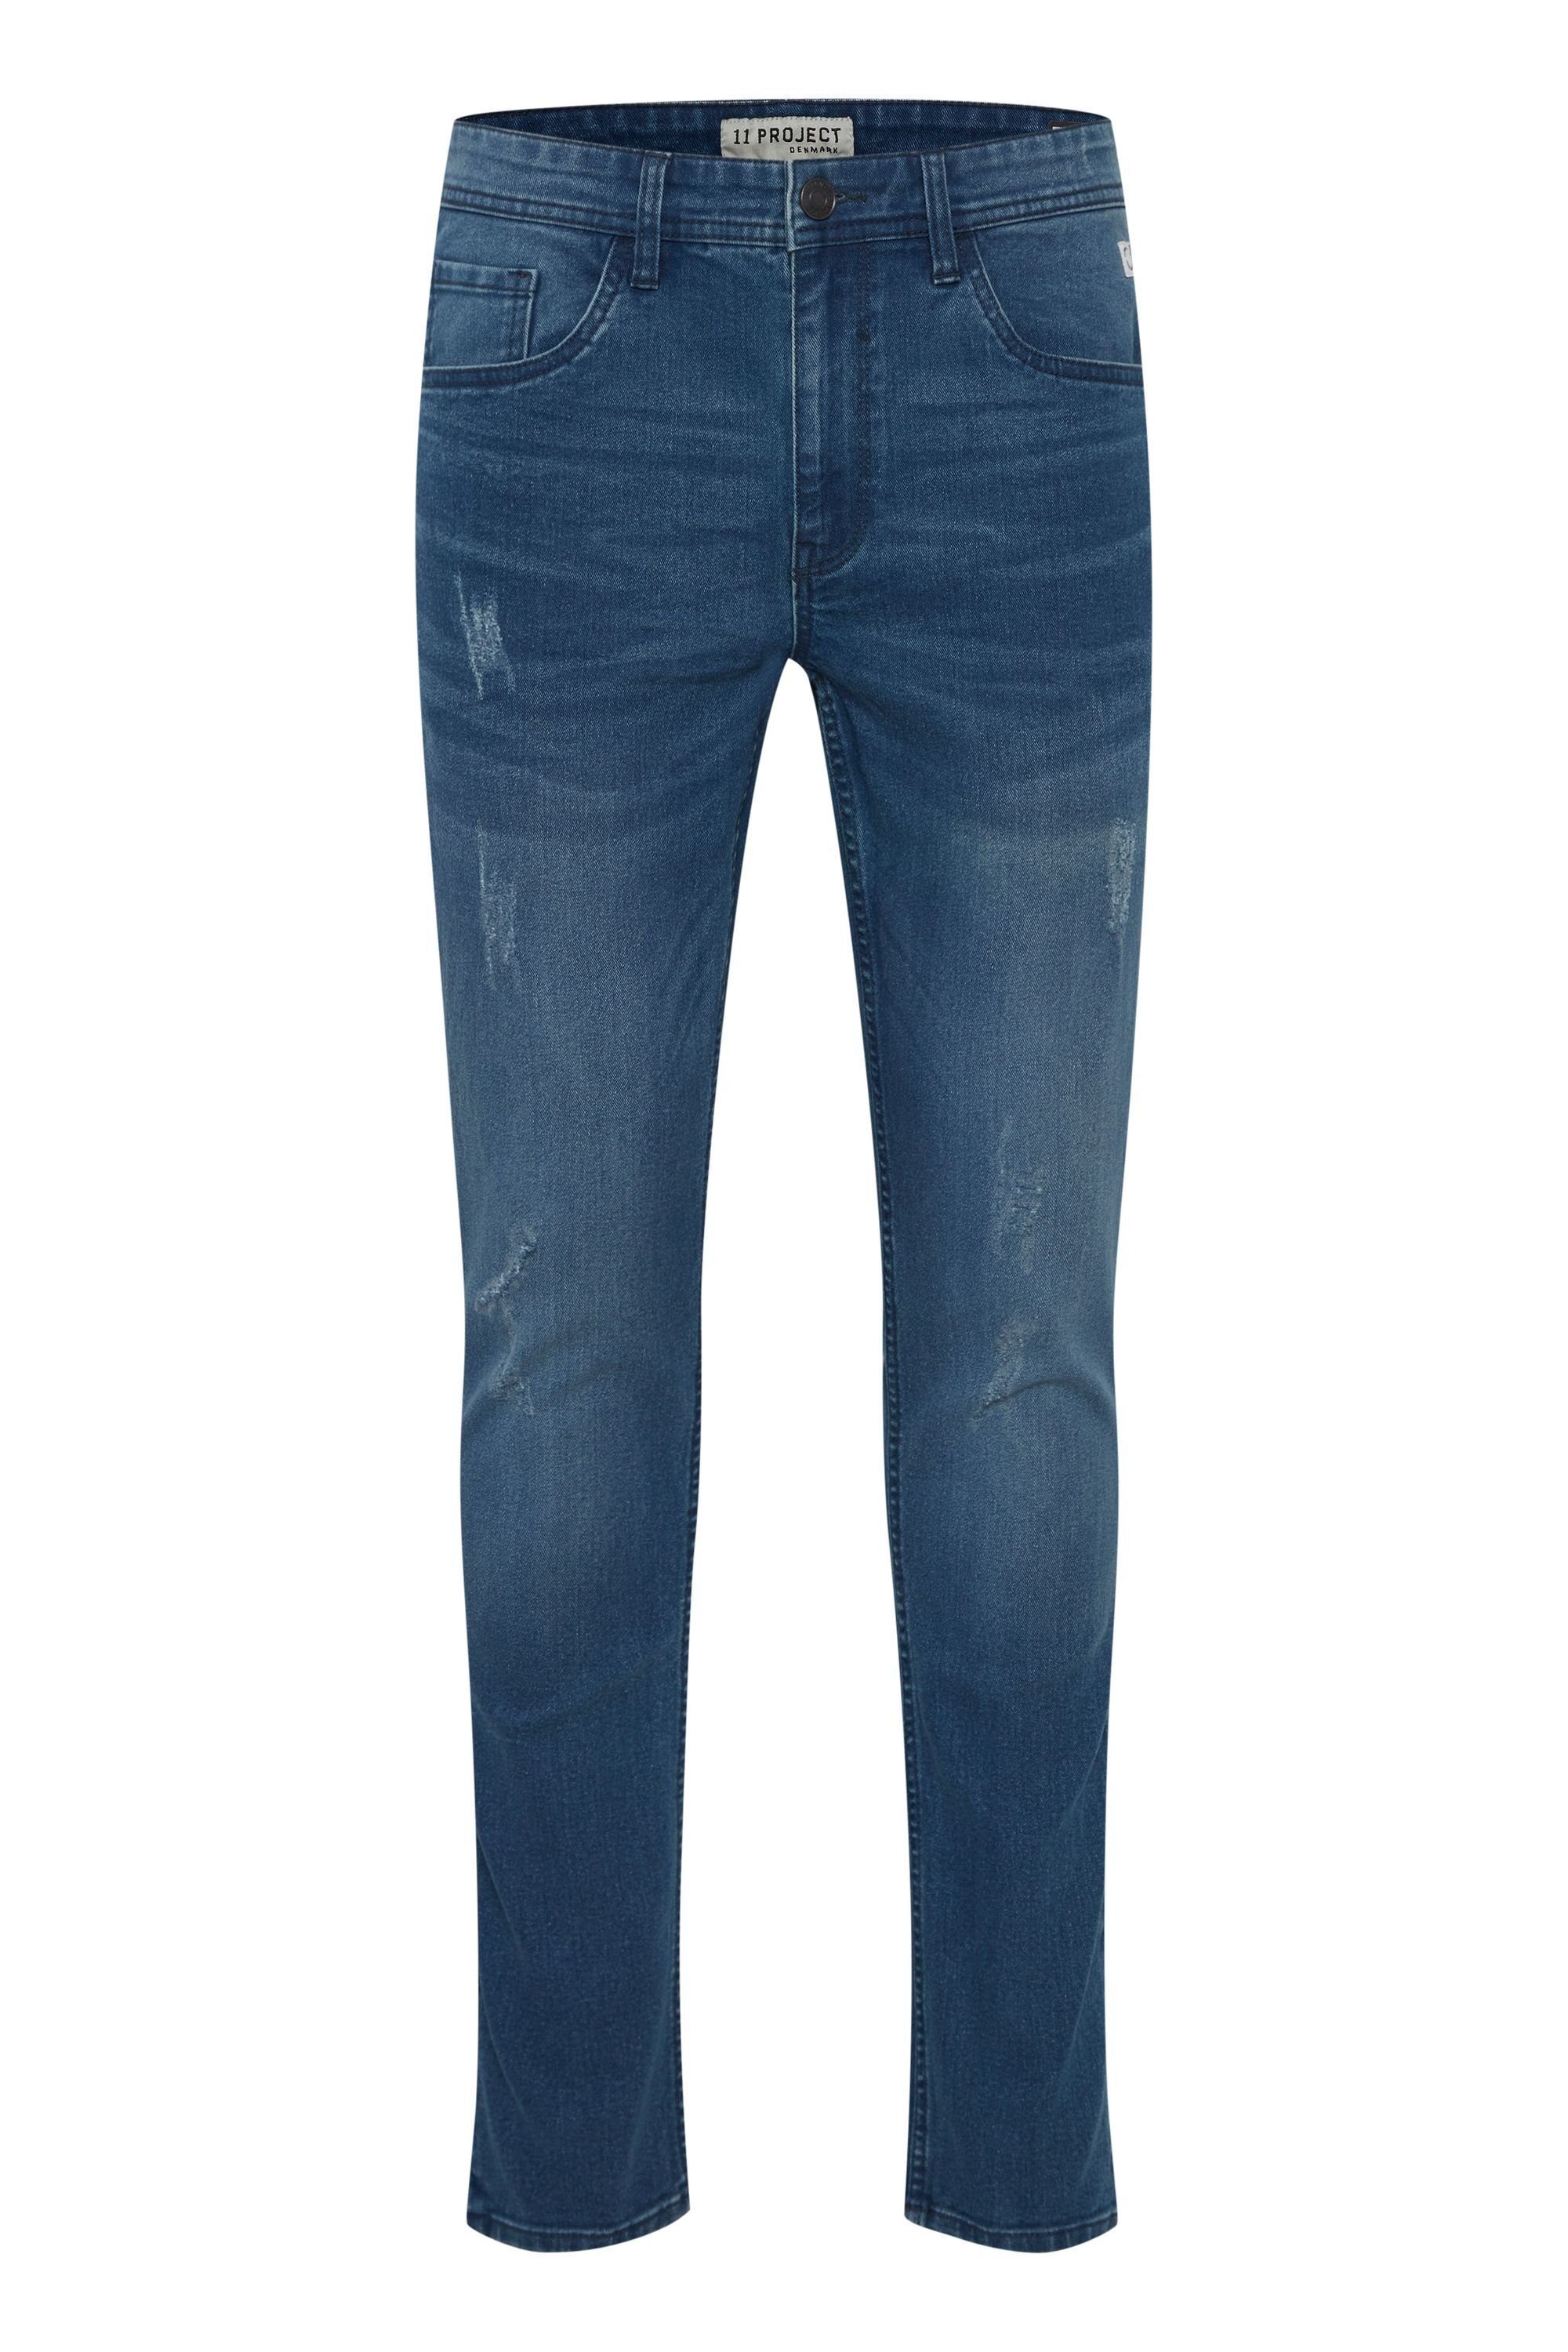 Denim Project PRPierino 11 blue 5-Pocket-Jeans Middle Project 11